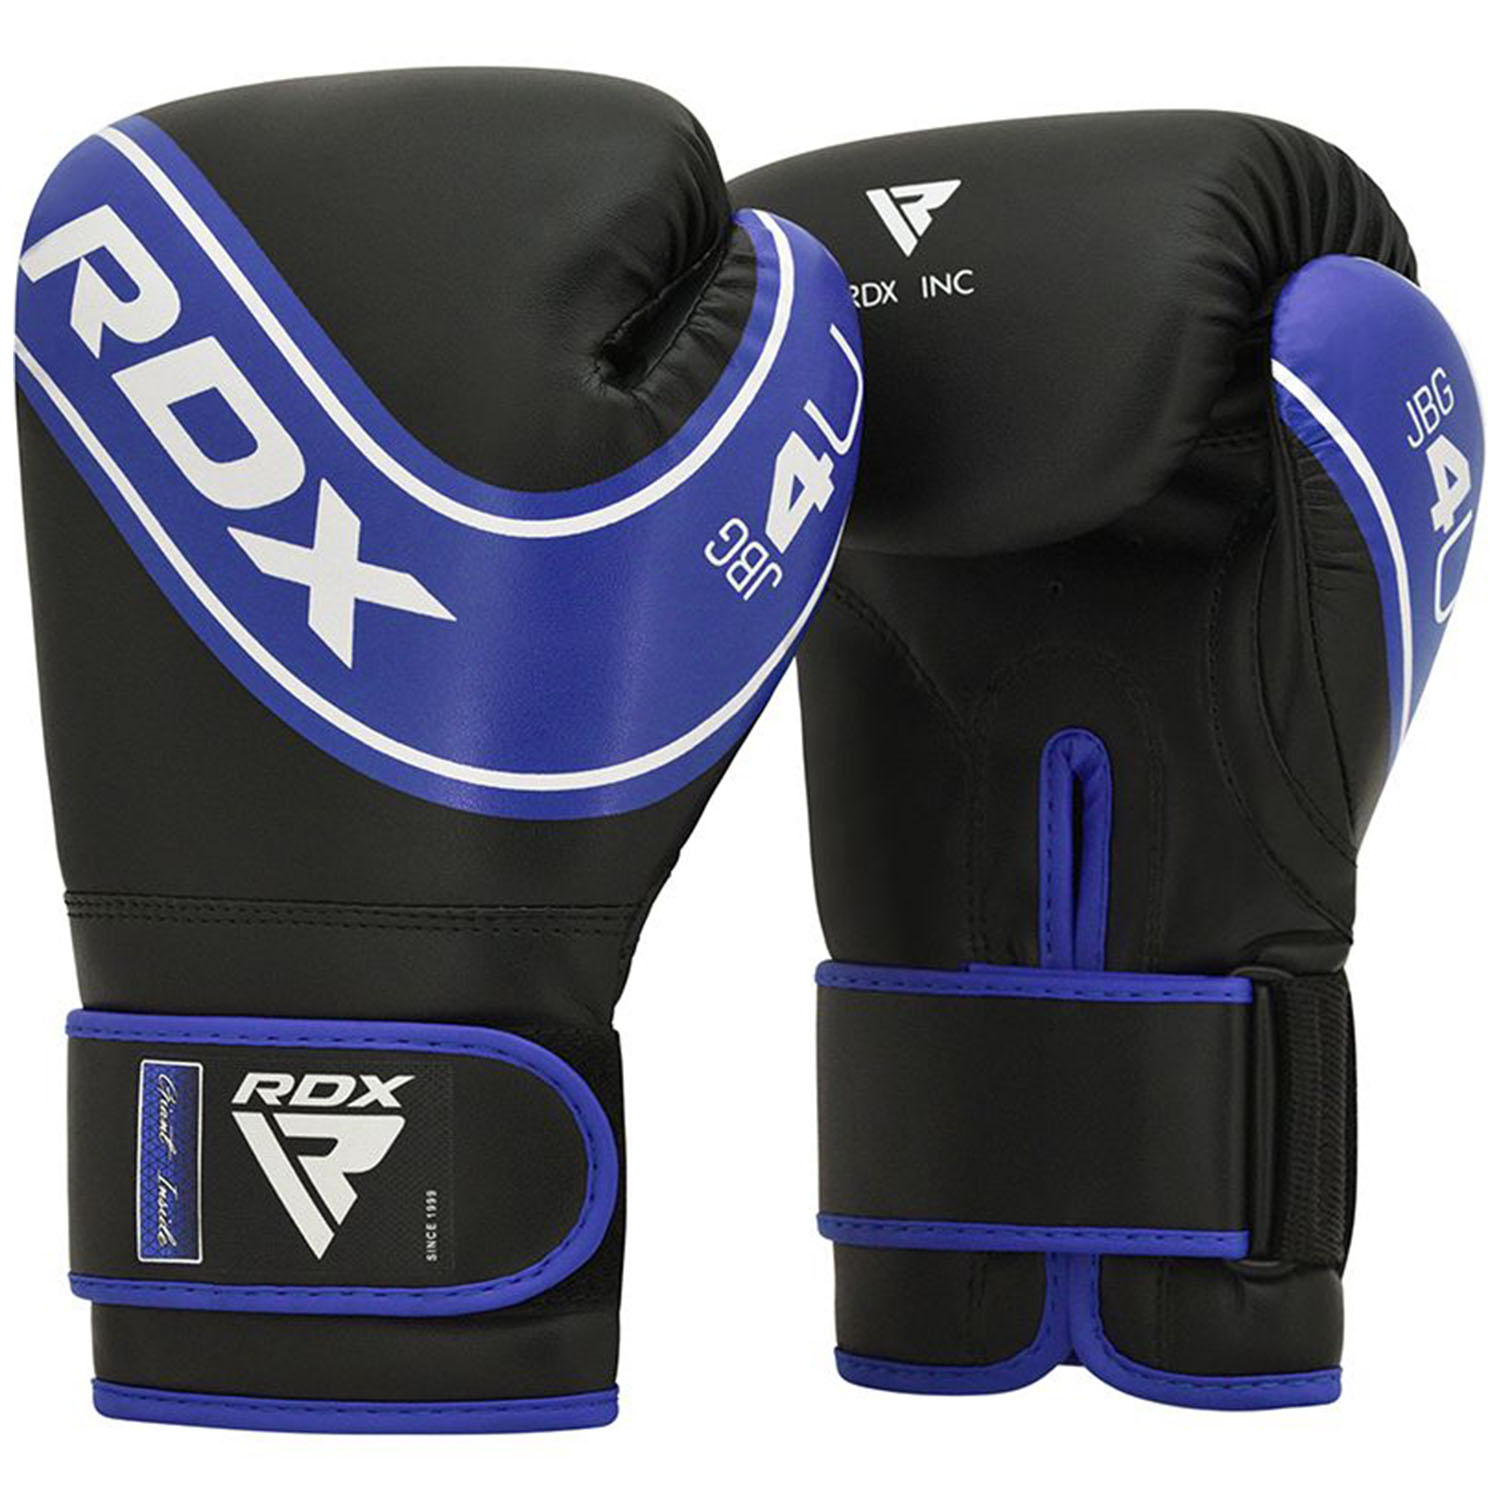 RDX Boxhandschuhe, Kinder, 4B, schwarz-blau, 4 Oz